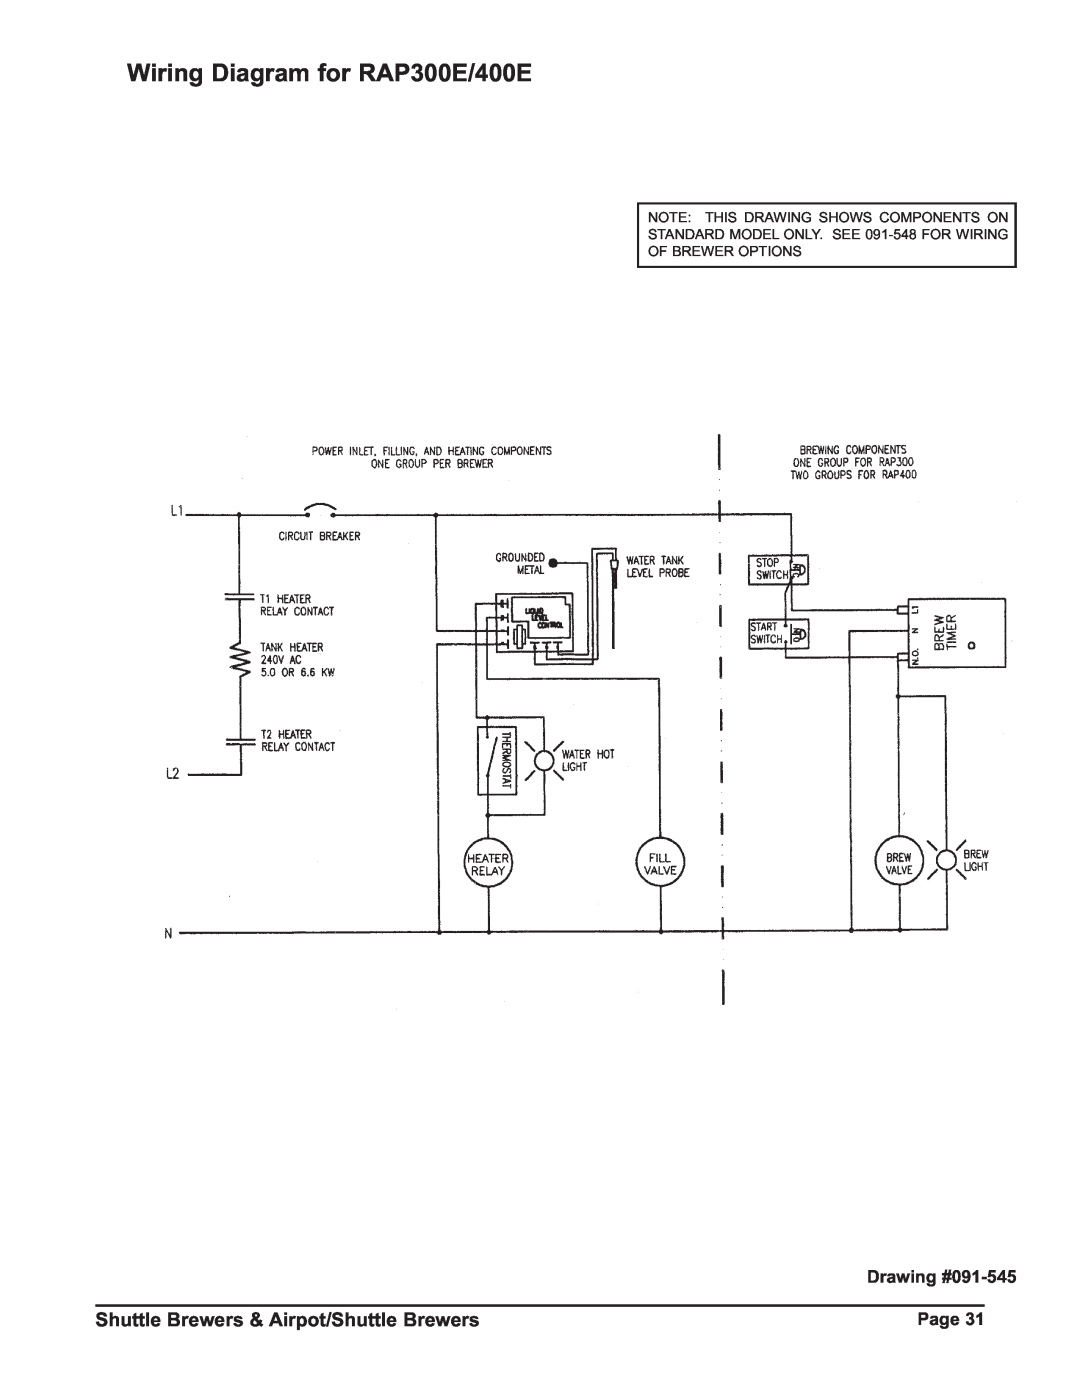 Grindmaster P400ESHP instruction manual Wiring Diagram for RAP300E/400E, Shuttle Brewers & Airpot/Shuttle Brewers 